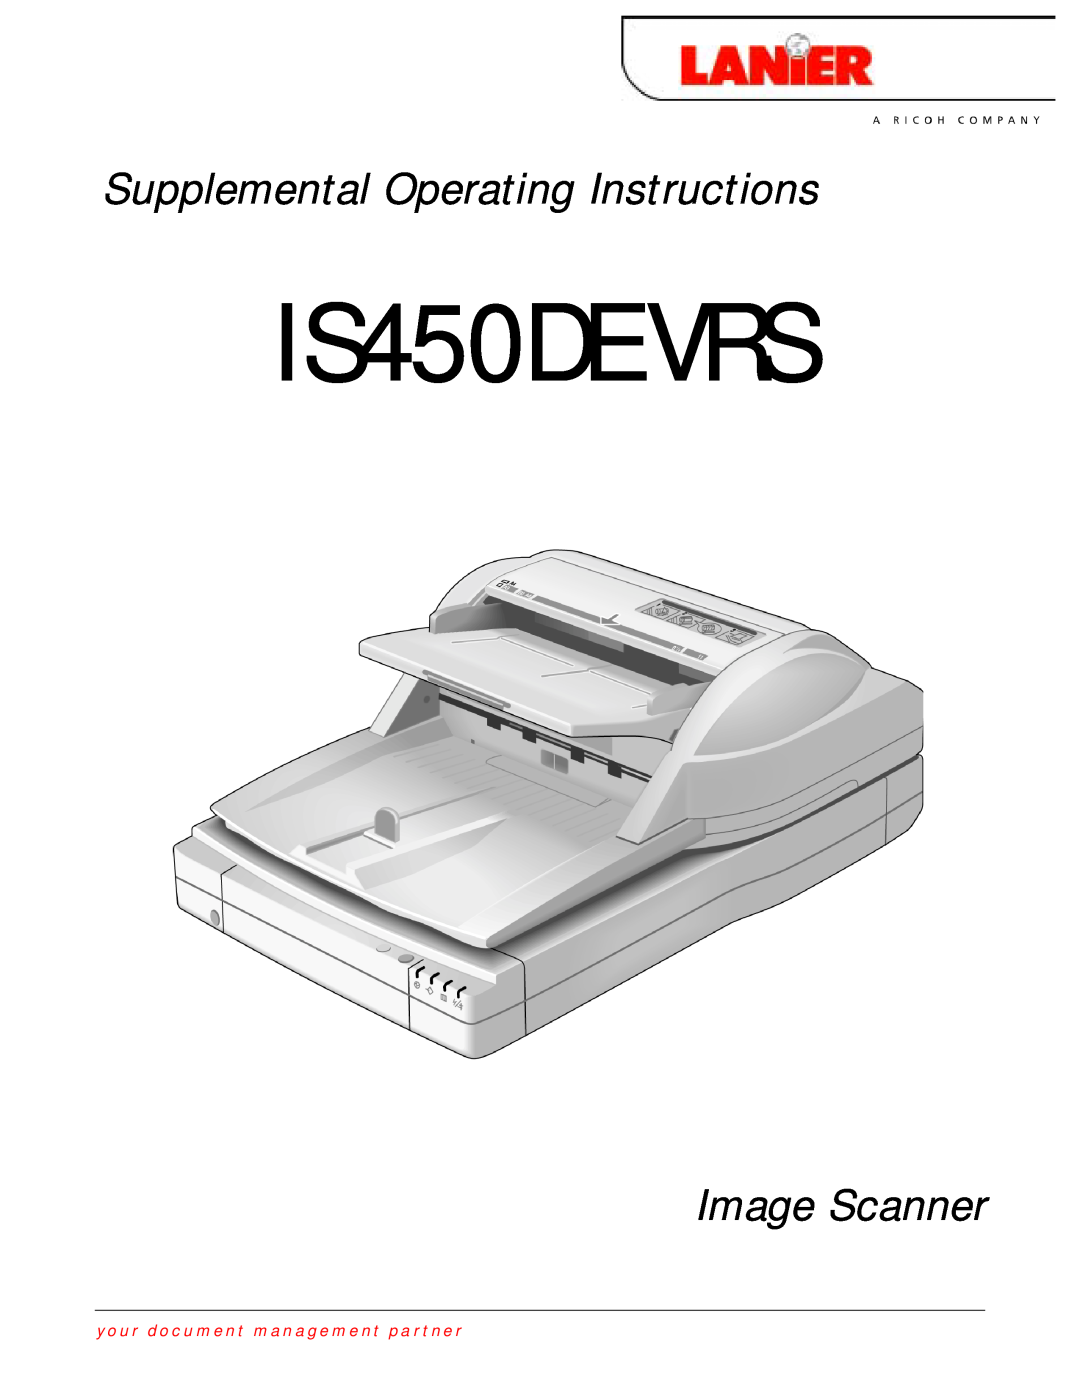 Lanier manual IS450DE VRS, Supplemental Operating Instructions, Image Scanner, your document management partner 